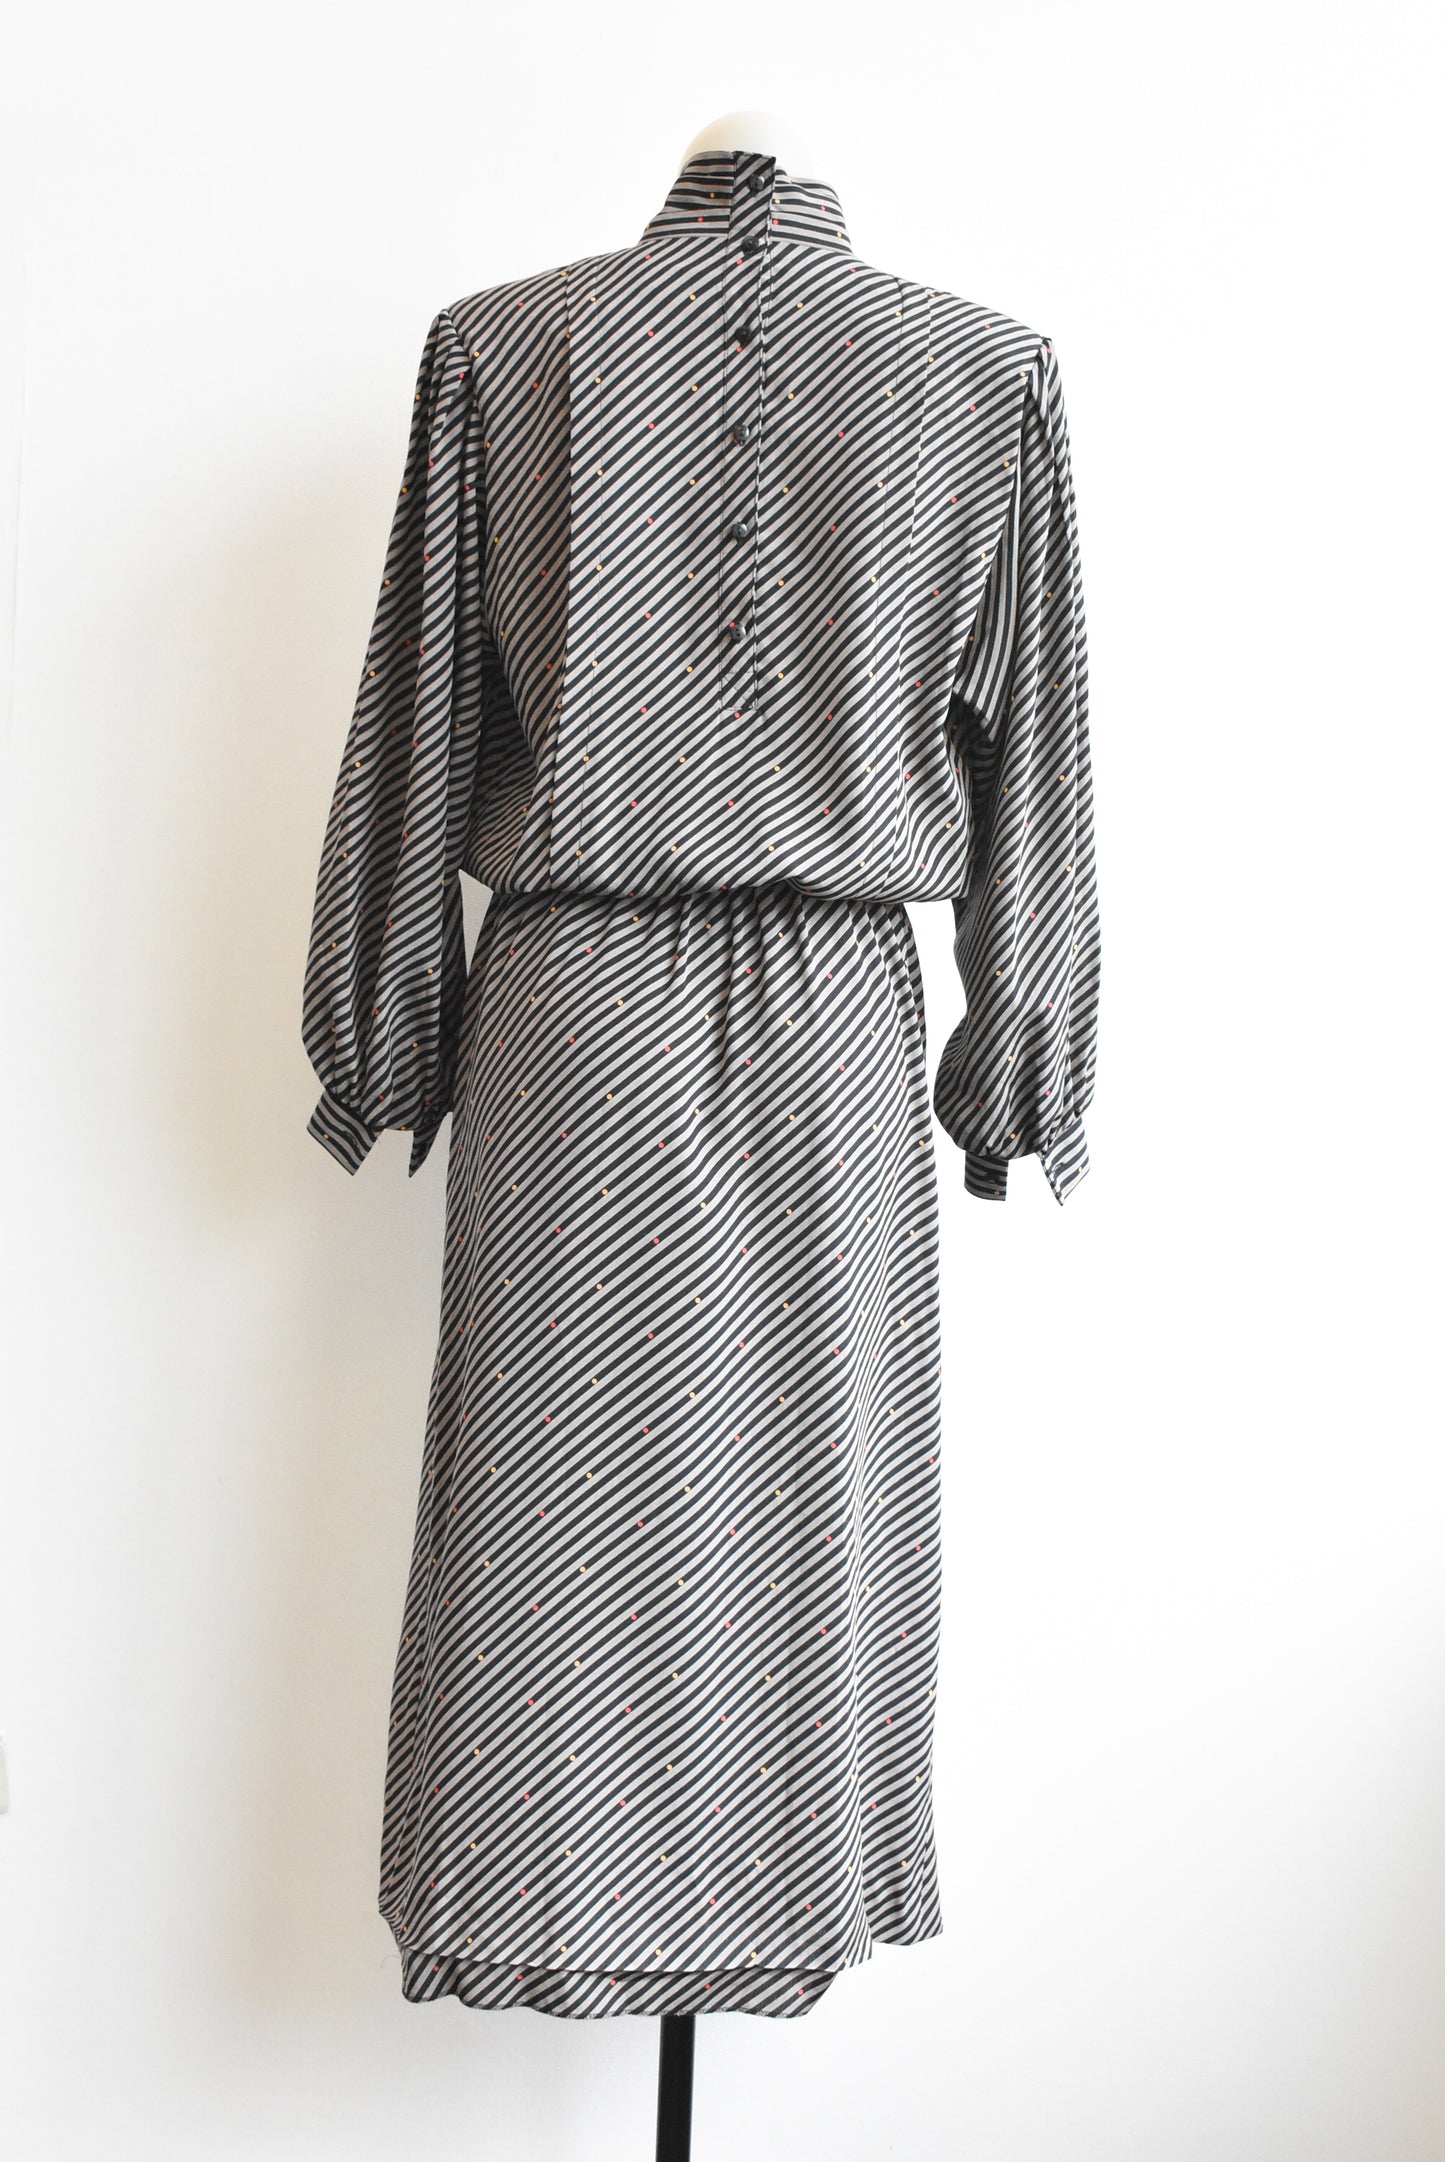 Rapport shoulder pad retro polka dot dress, size S-M